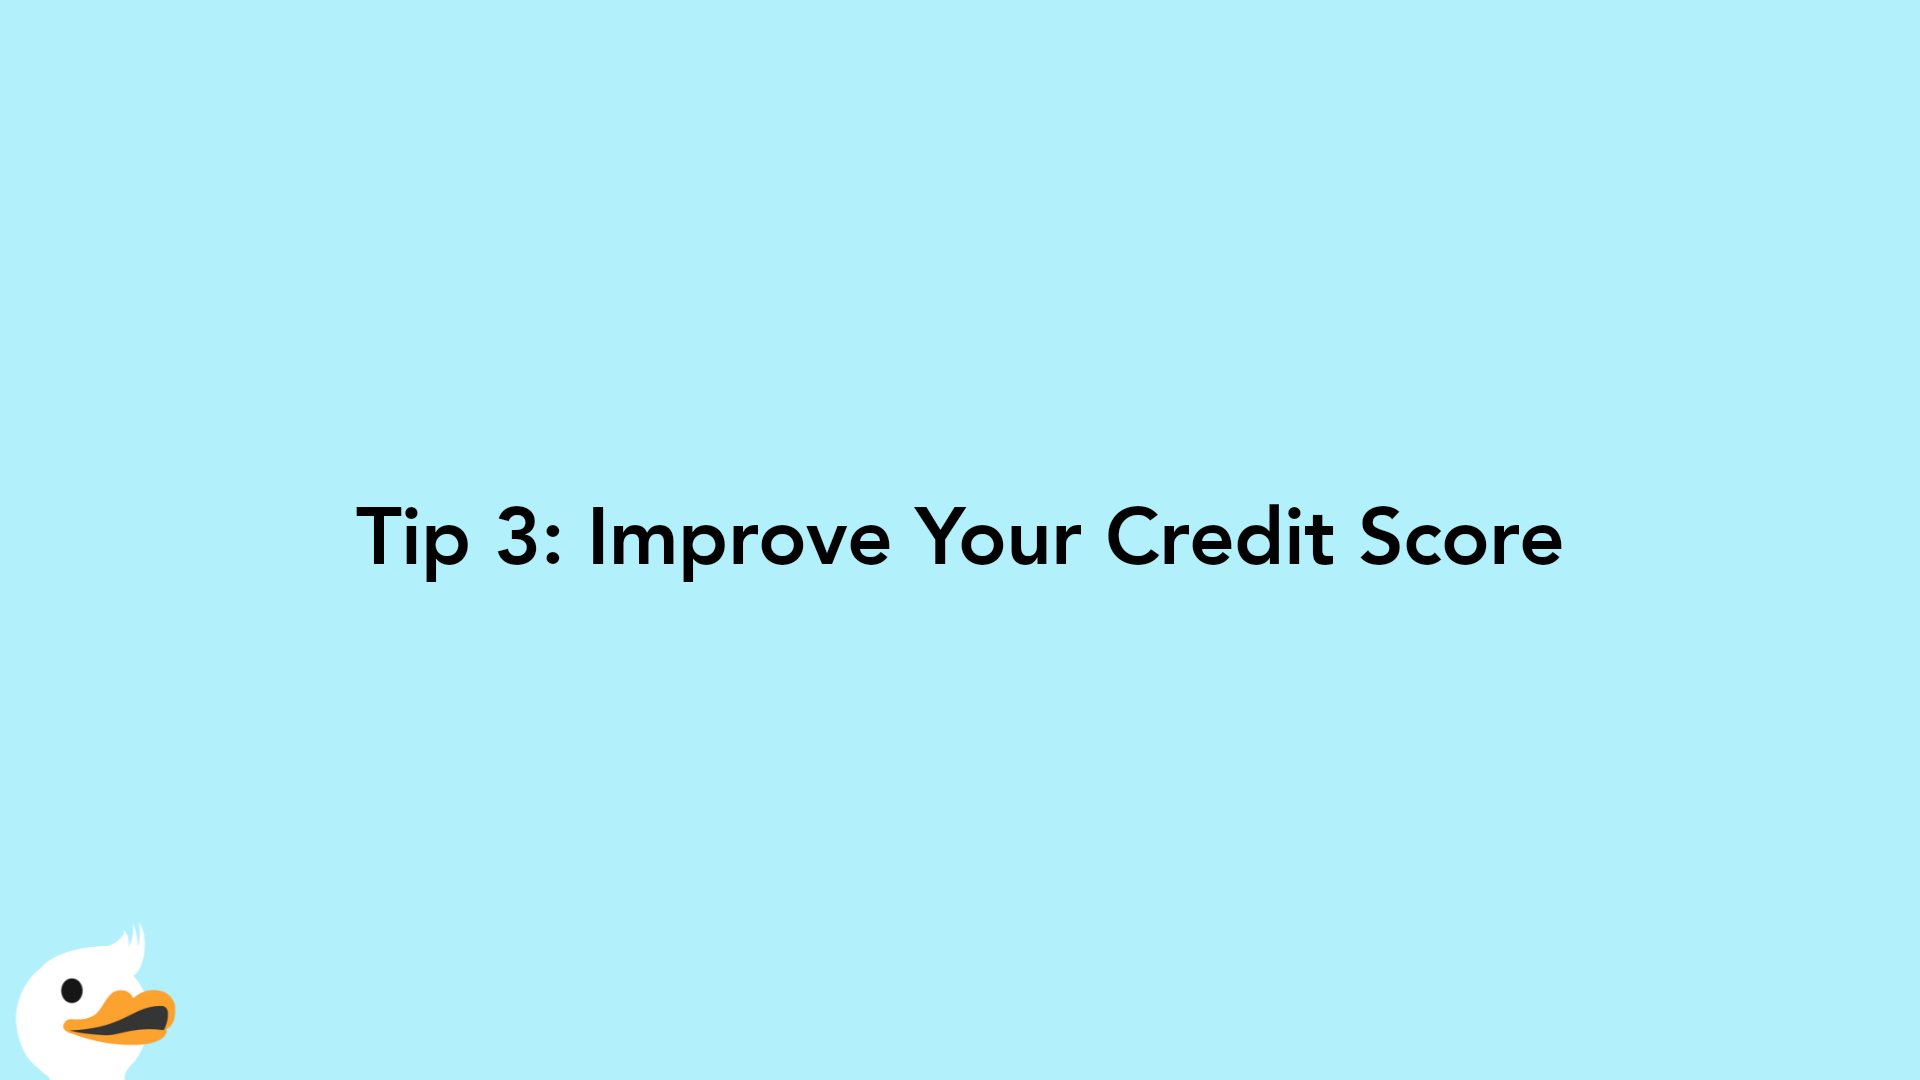 Tip 3: Improve Your Credit Score